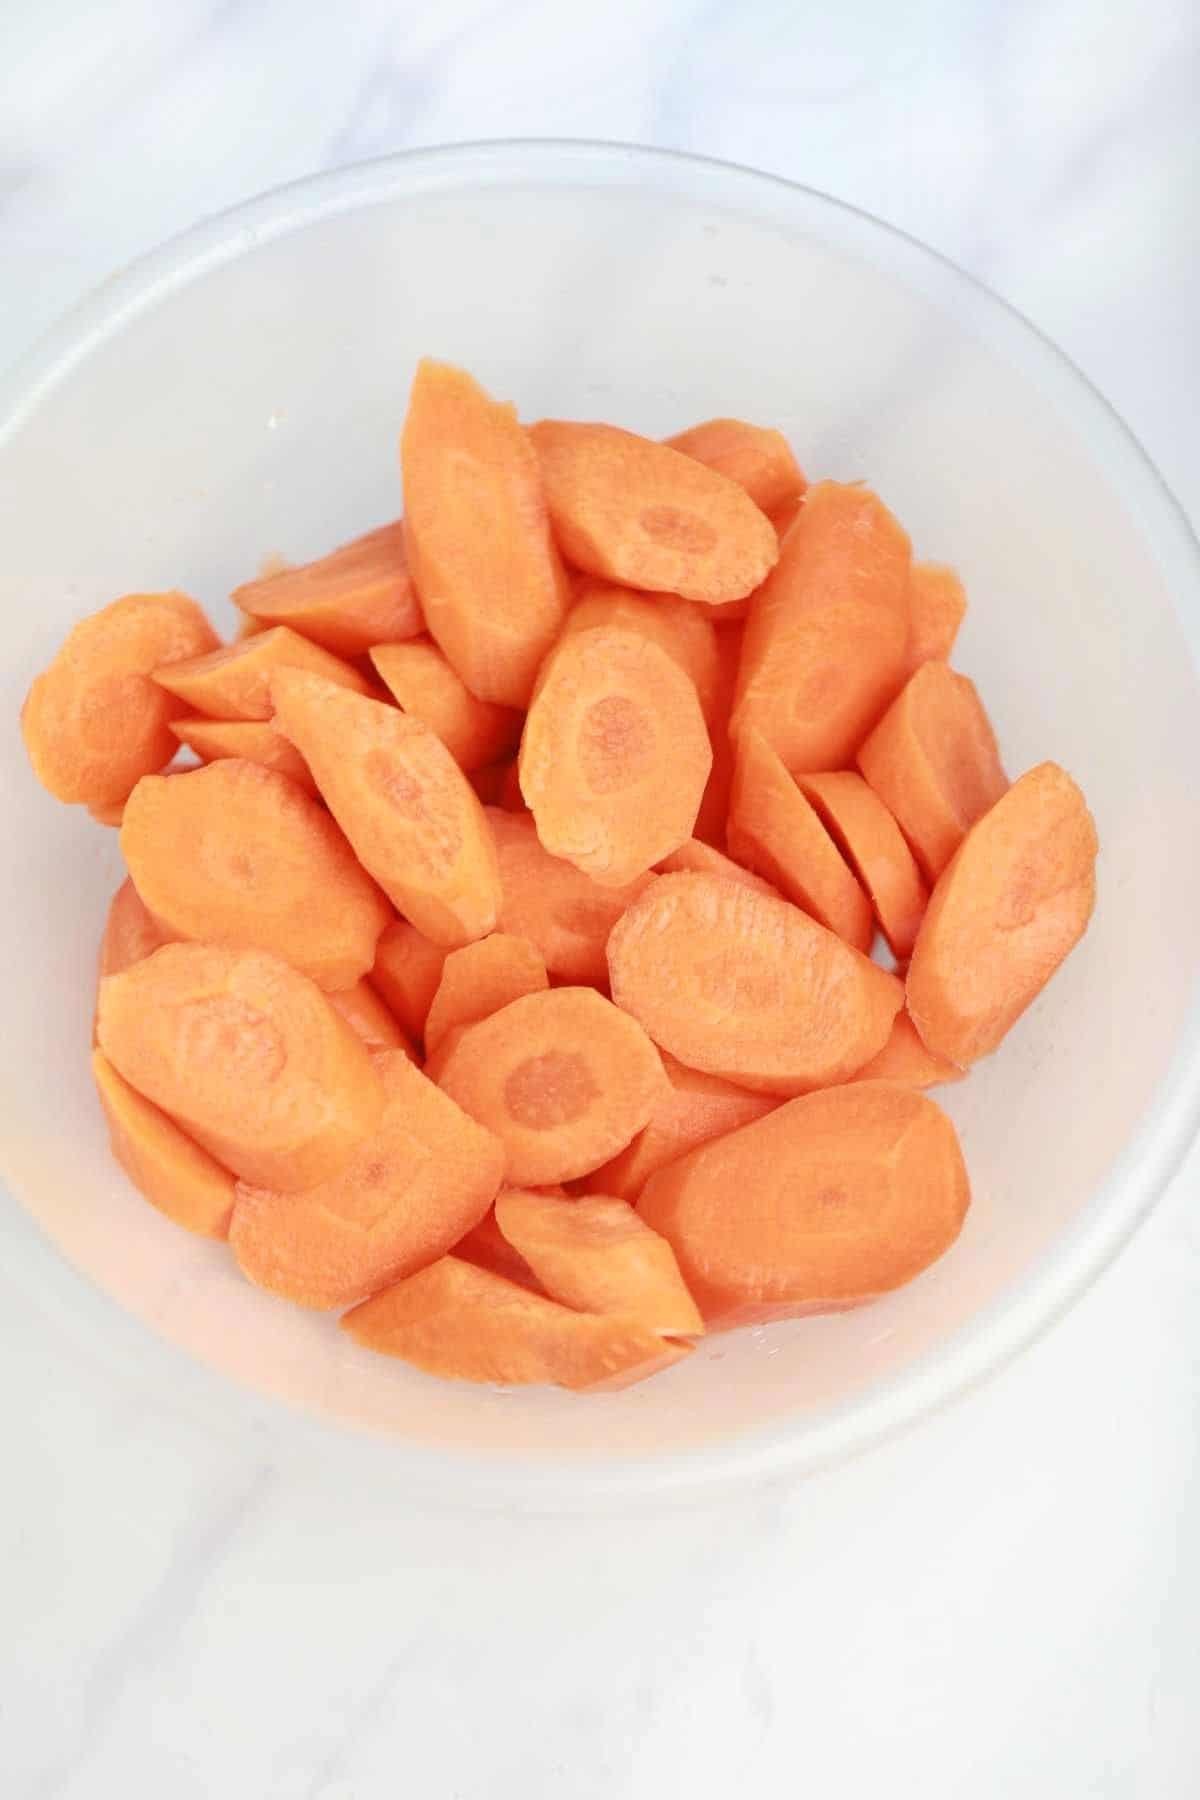 cut carrots in a bowl.